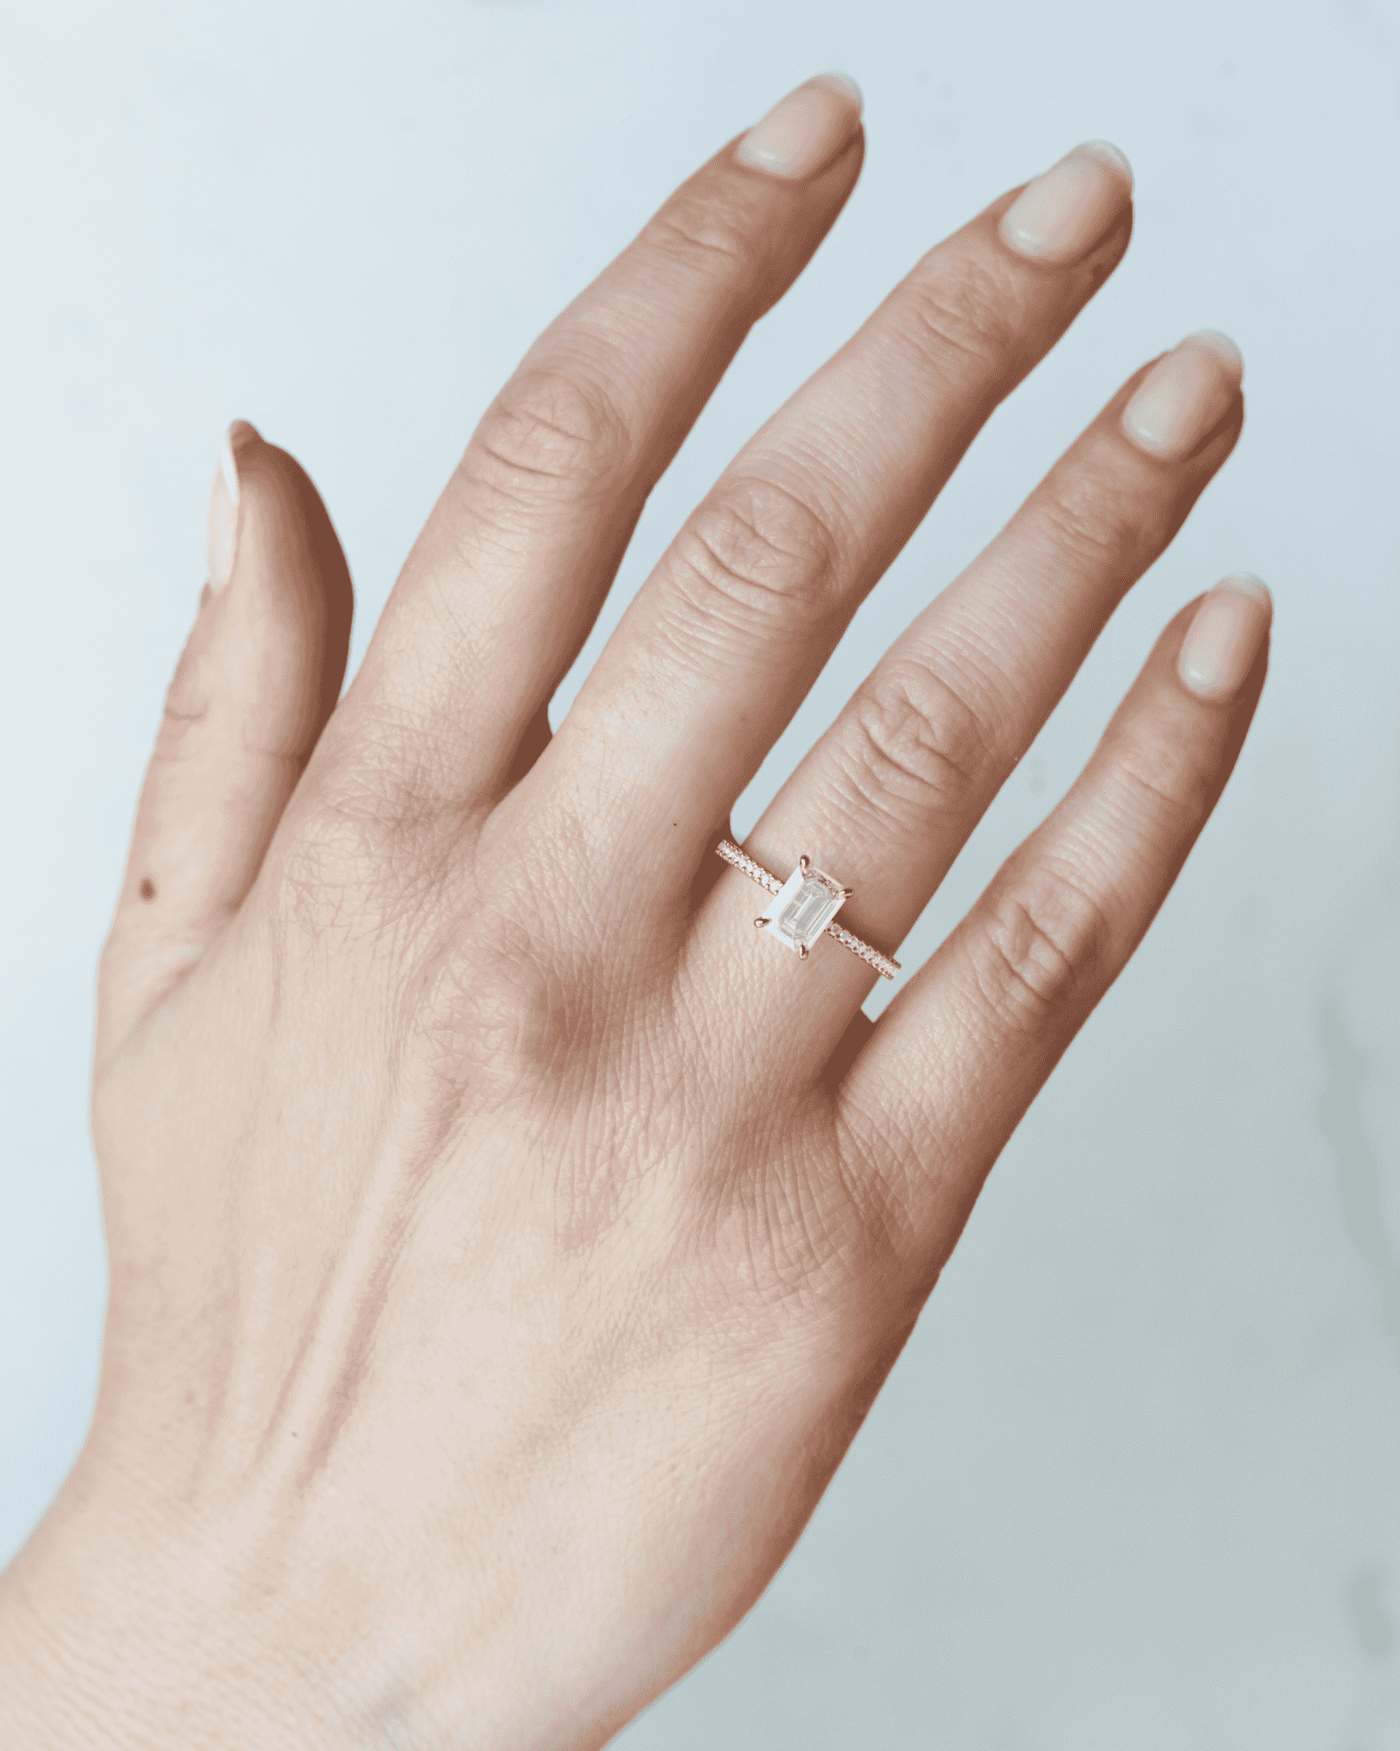 Emerald-Cut Tapered White Diamond Half Pave Ring